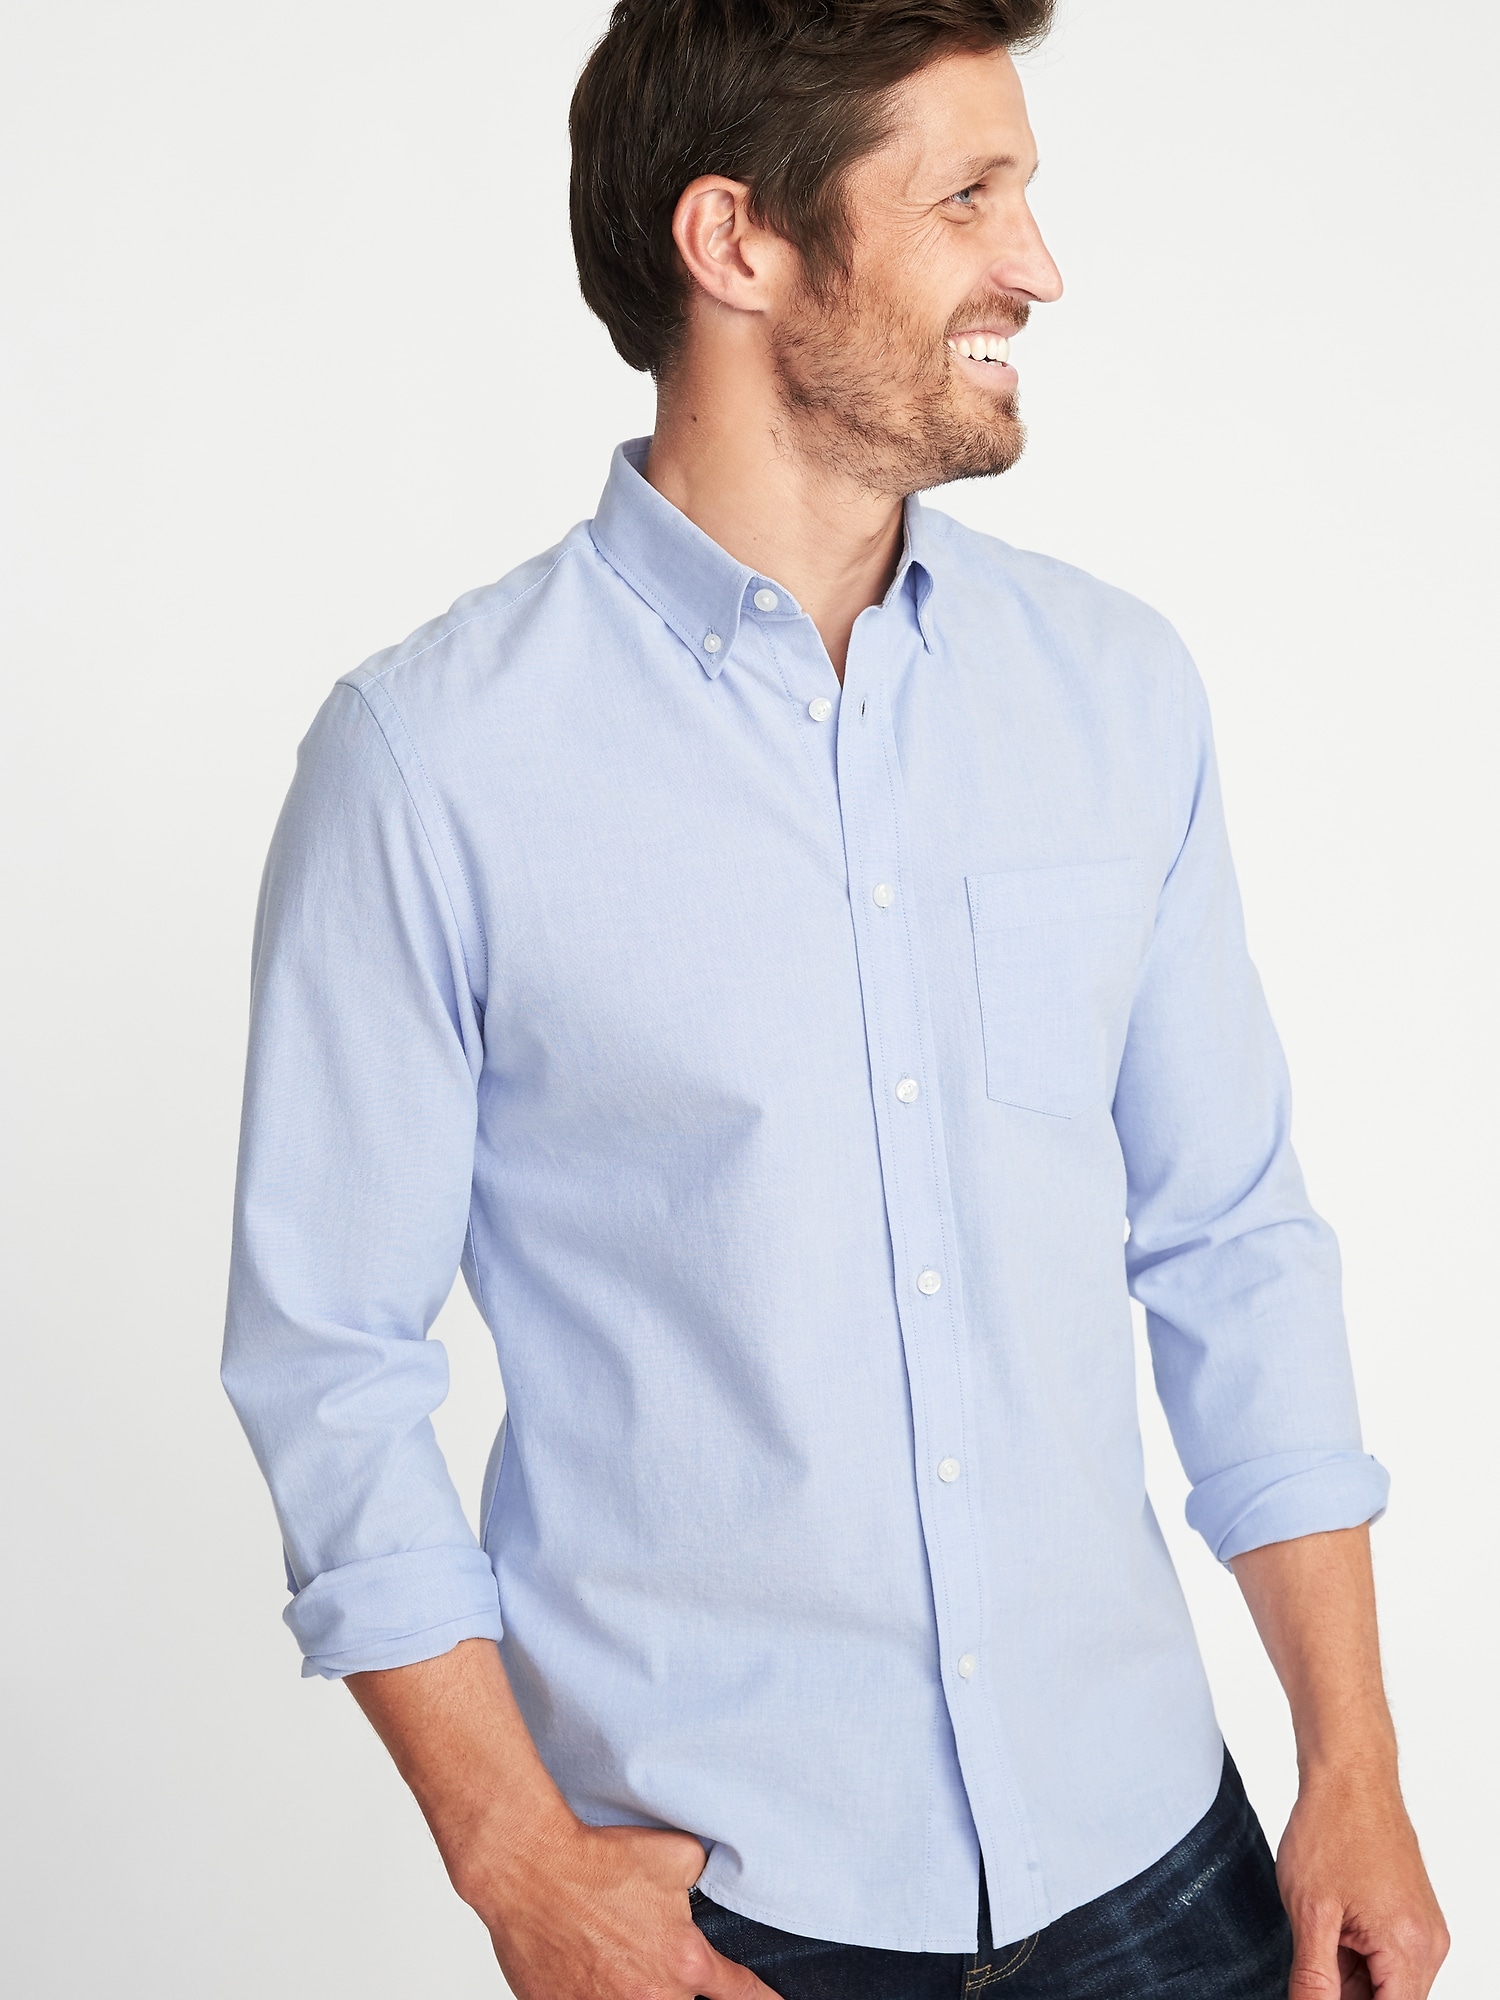 Slim-Fit Built-In Flex Everyday Oxford Shirt For Men | Old Navy